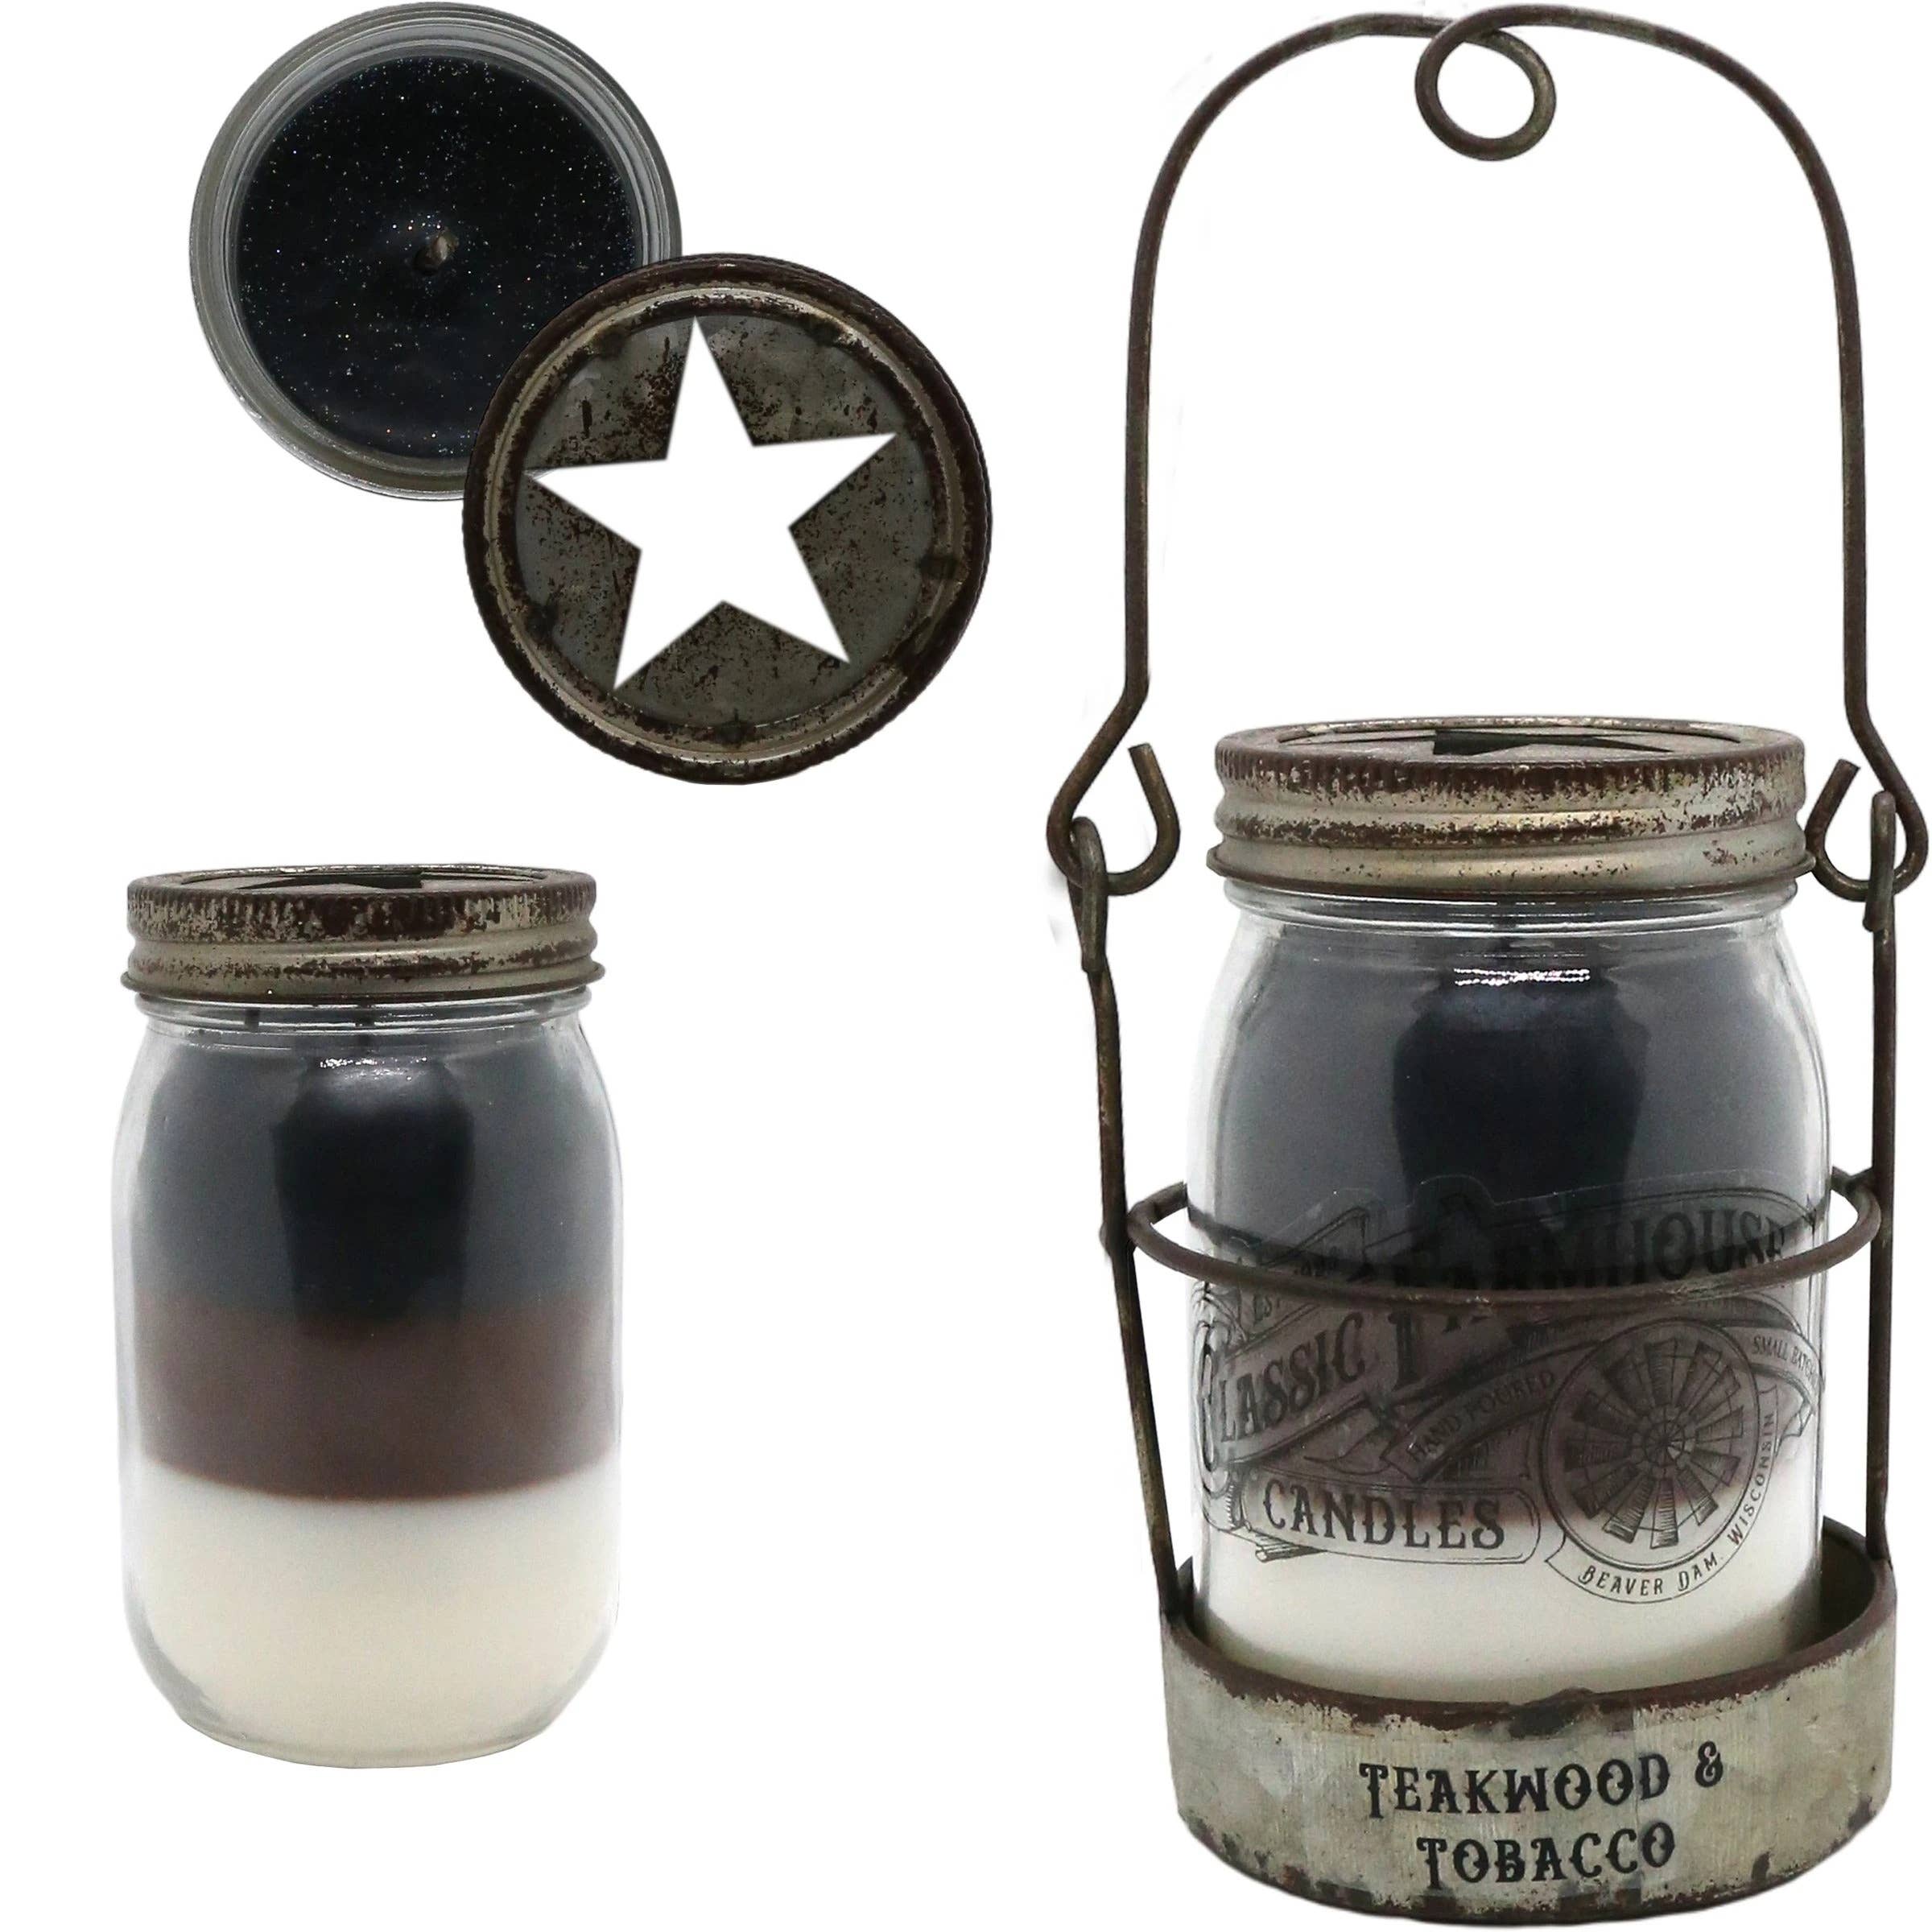 TEAKWOOD & TOBACCO - Classic Farmhouse Candles